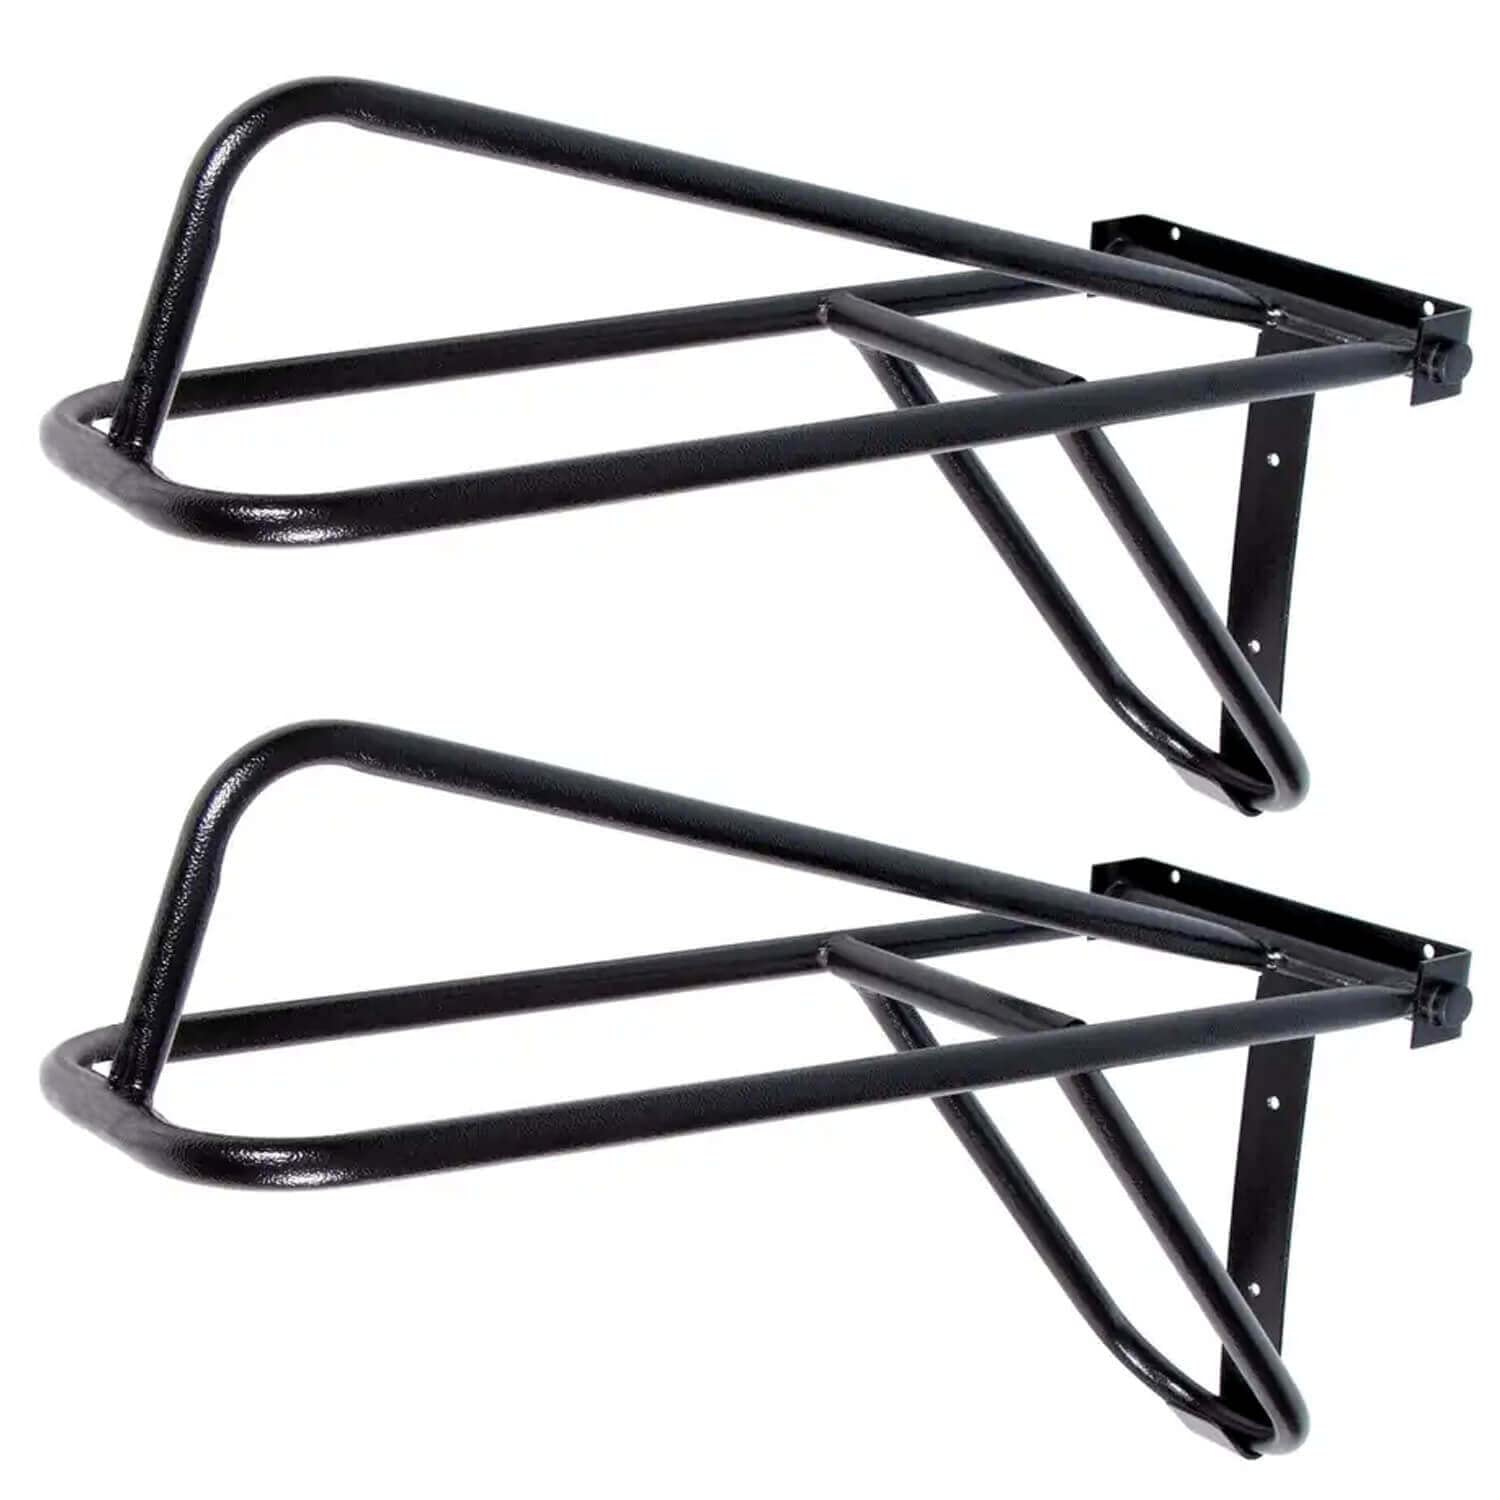 HDR Fold down saddle rack E & W